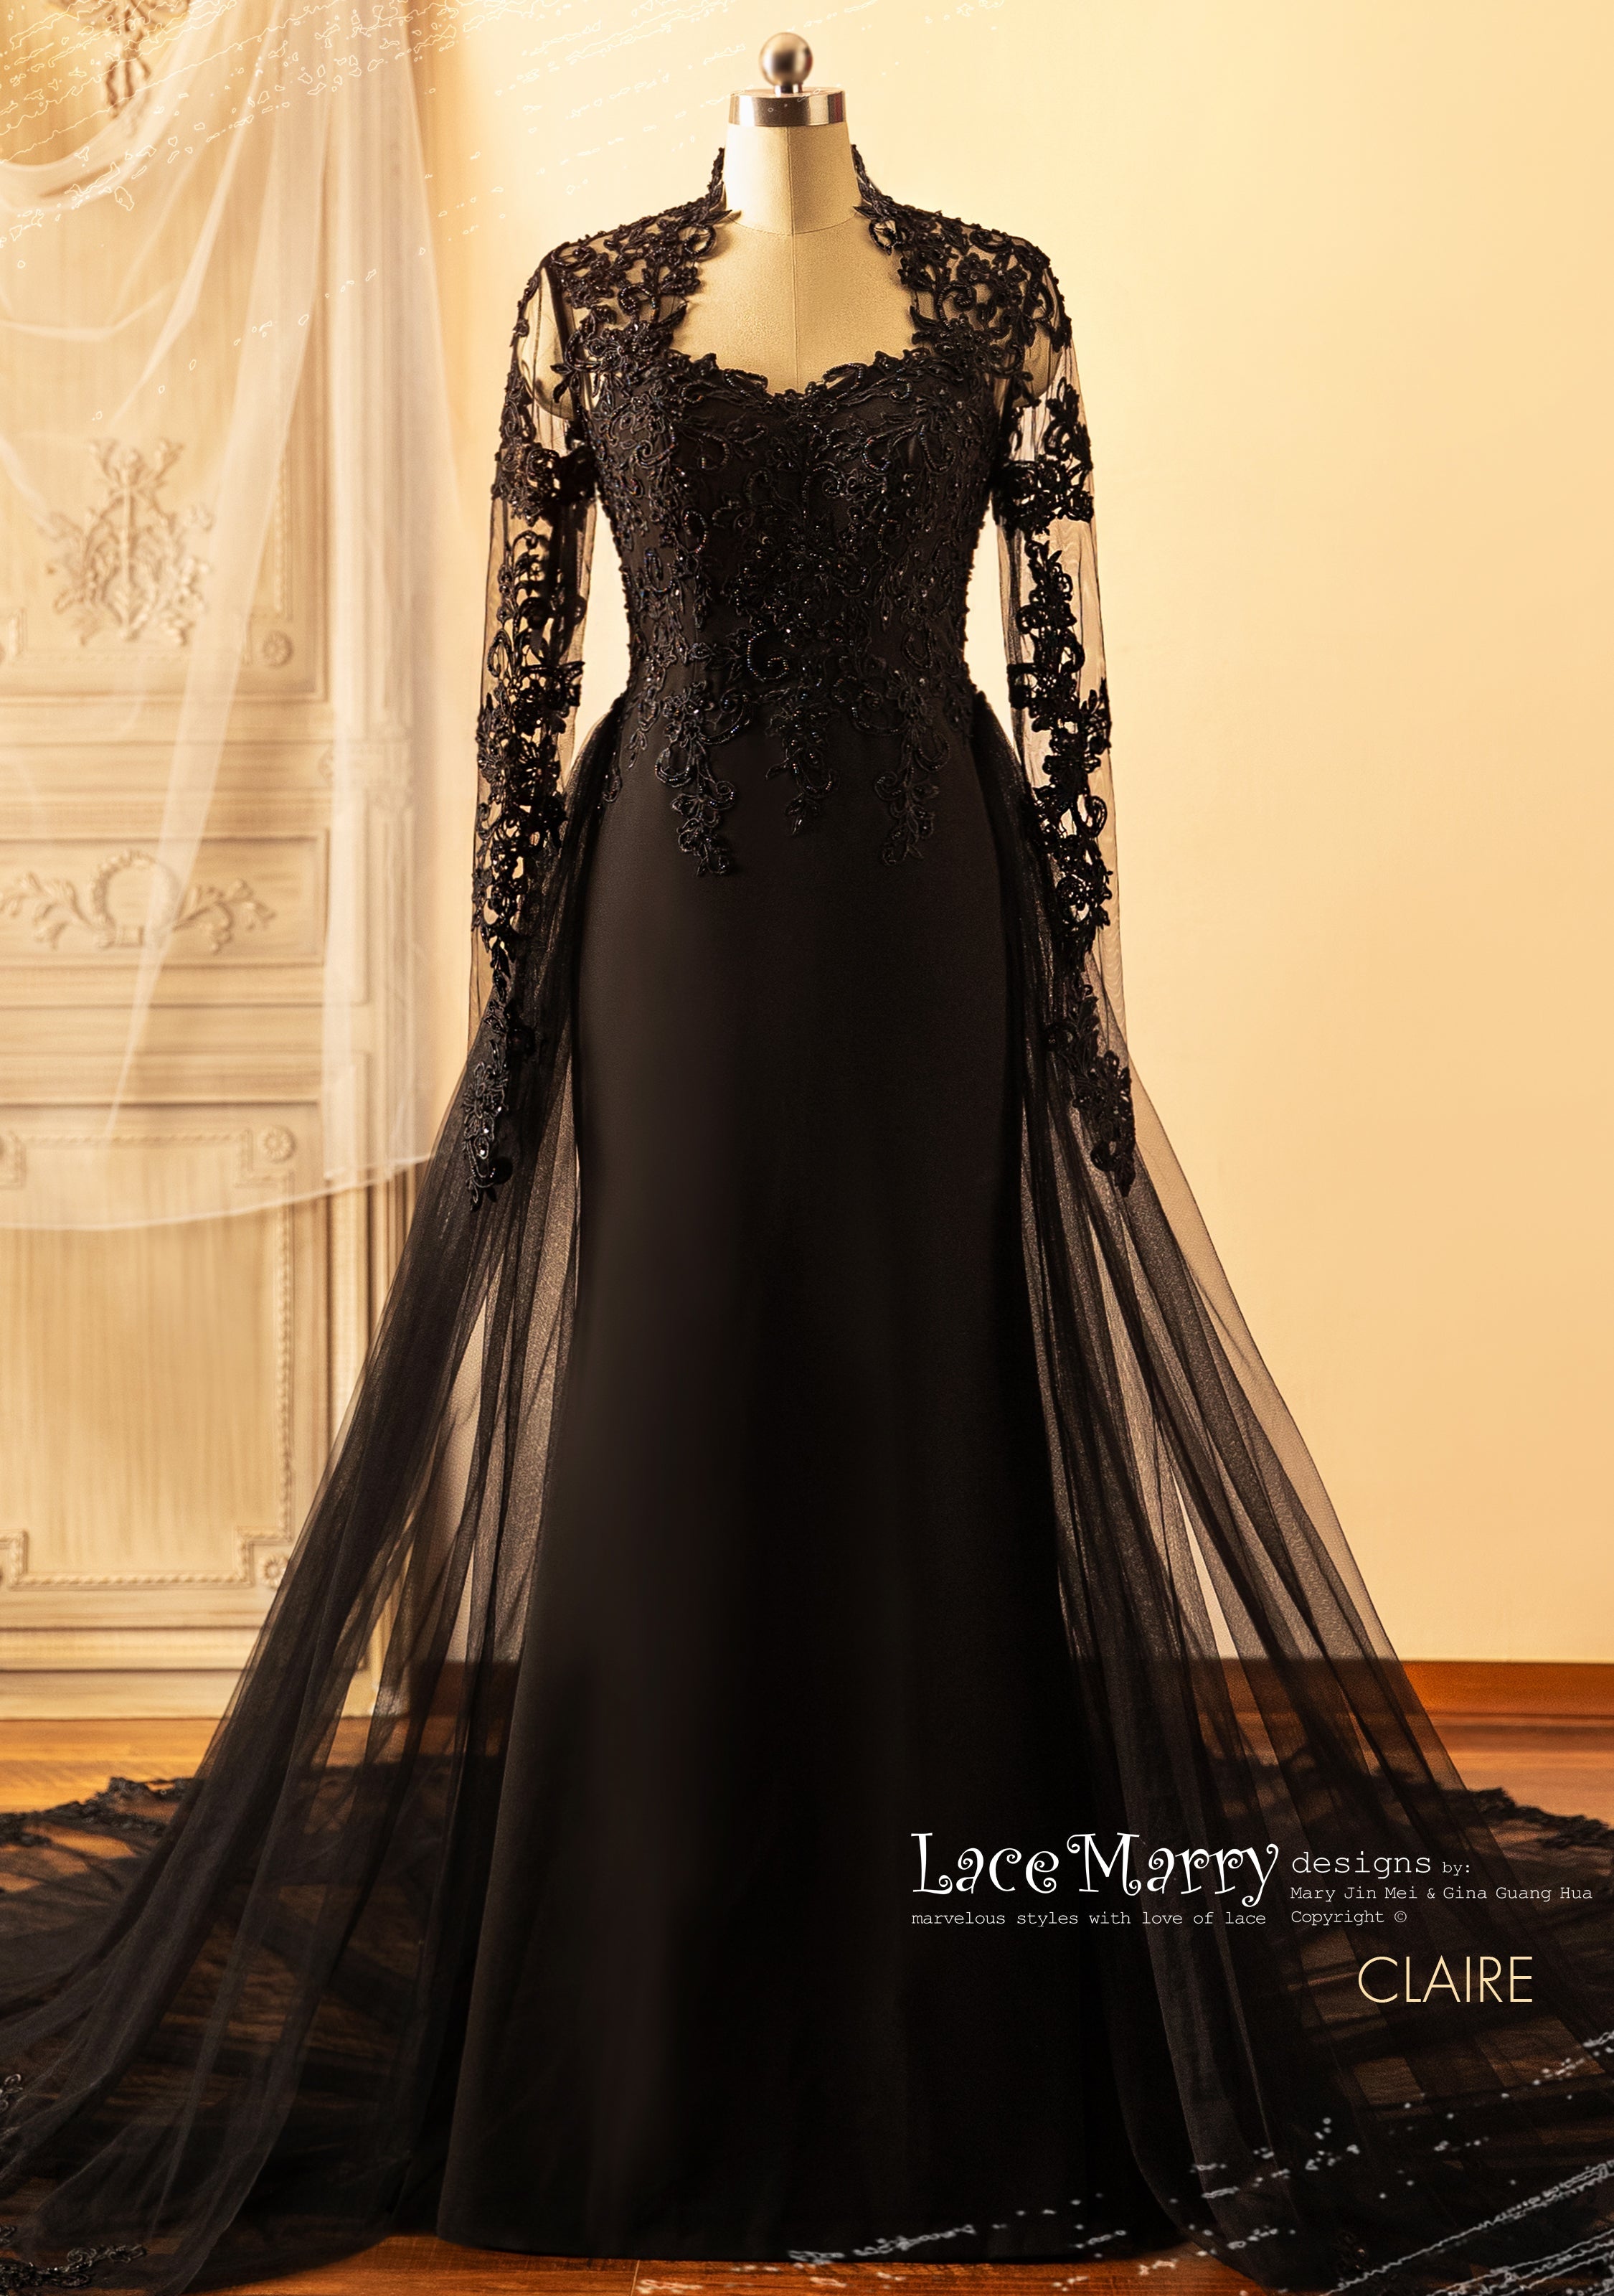 Floral Lace Black Wedding Dress With Deep V-back, Black Lace Bridal Dress  Long Sleeves Plus Size Botanical Floral Wedding Dress Rosaleen -  Canada